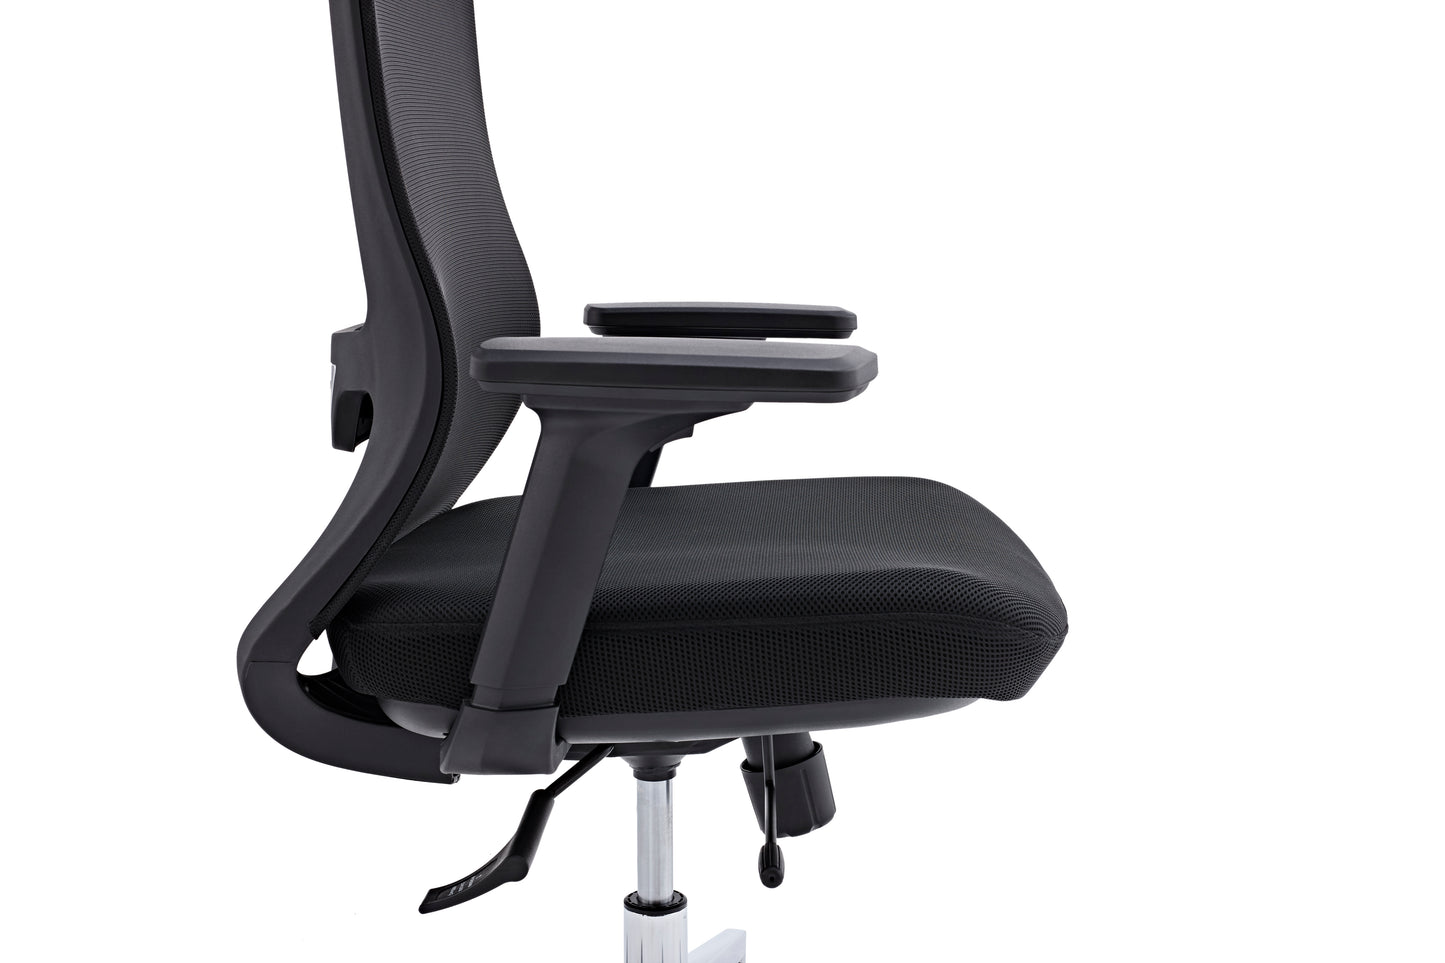 H65C High Back Ergonomic Chair